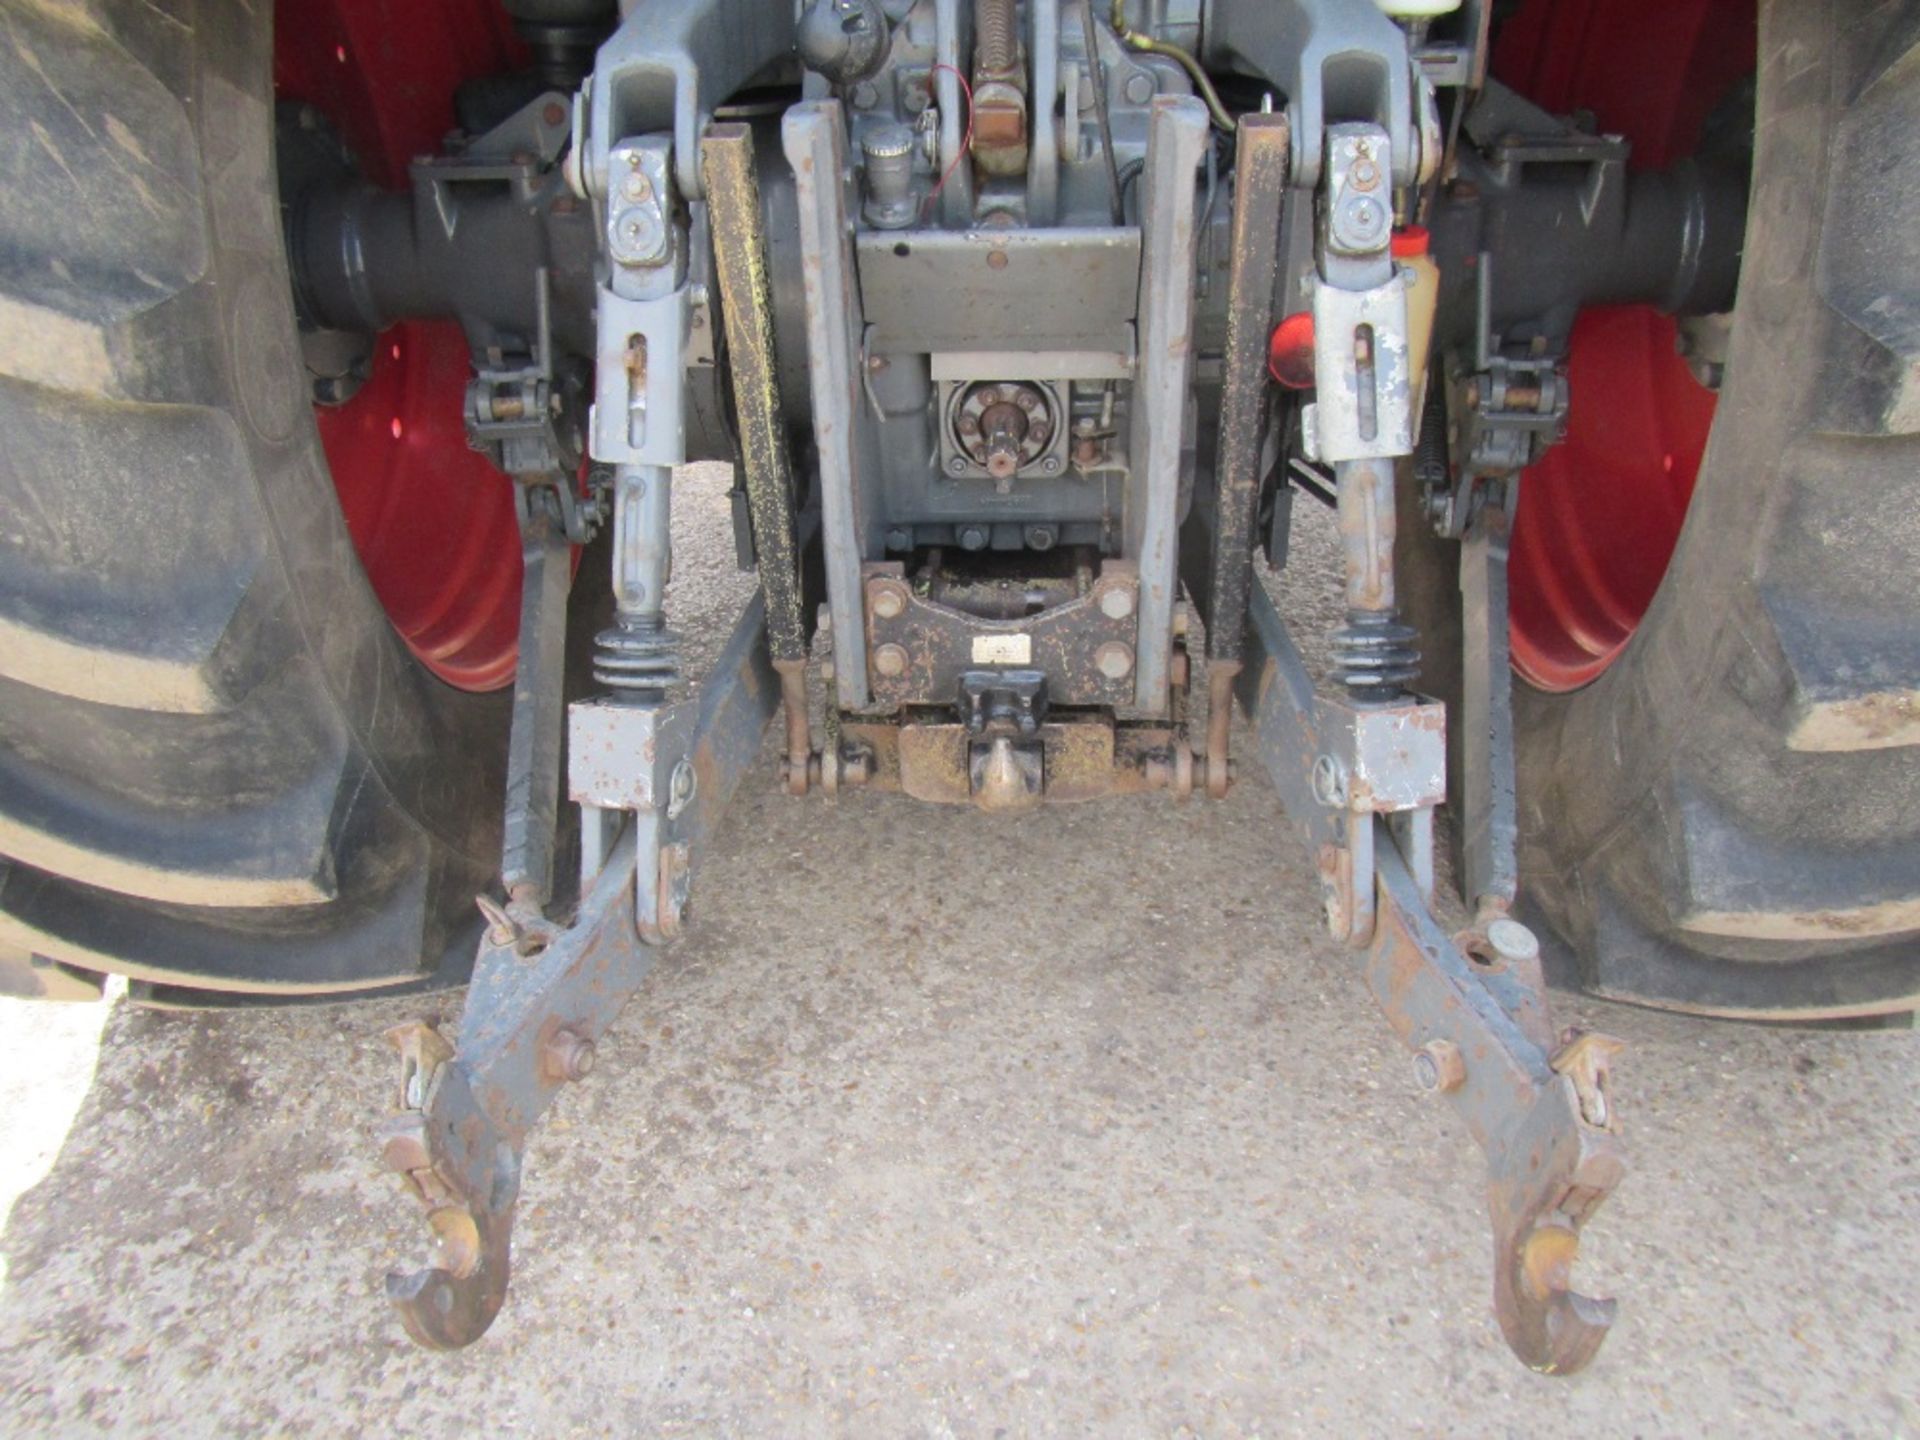 2009 Fendt 820 Tractor with Links & PTO. No V5 7000 Hrs Reg No PN09 NRL Ser No 731216450 - Image 8 of 19